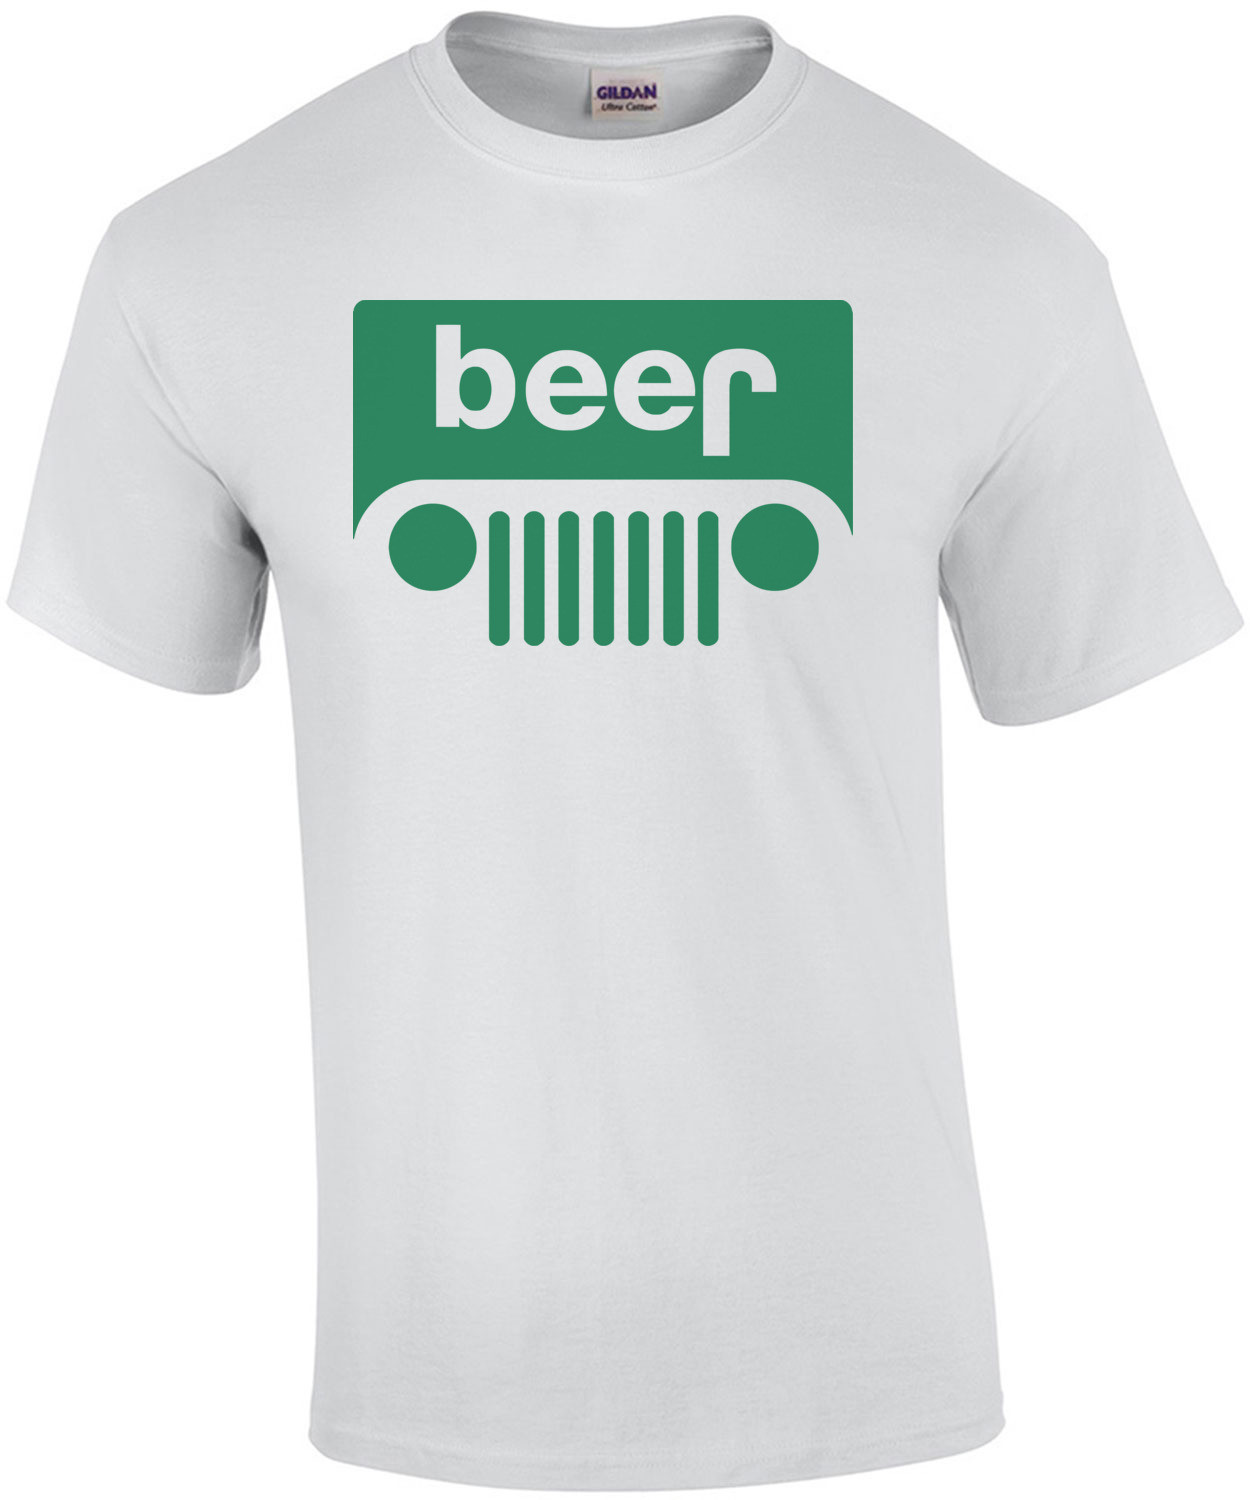 Beer Jeep Parody Shirt